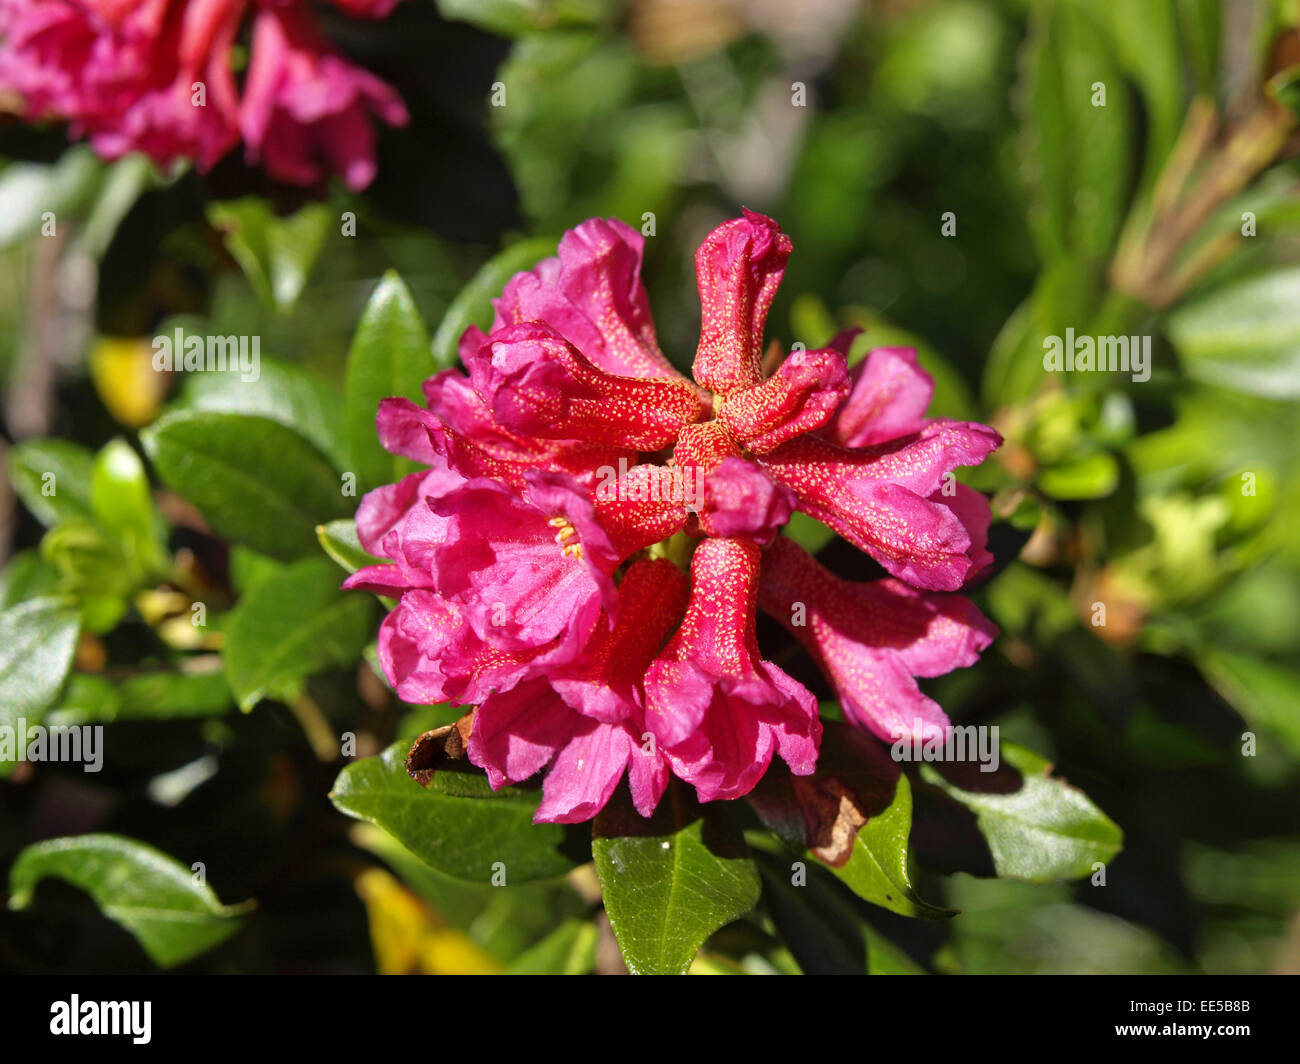 Alpenrose, Rhododendron, close-up, Natur, Vegetation, Botanik, Bergregion, Alpenblume, Blume, Stiel, Bluete, rosa, geschuetzt, N Stock Photo